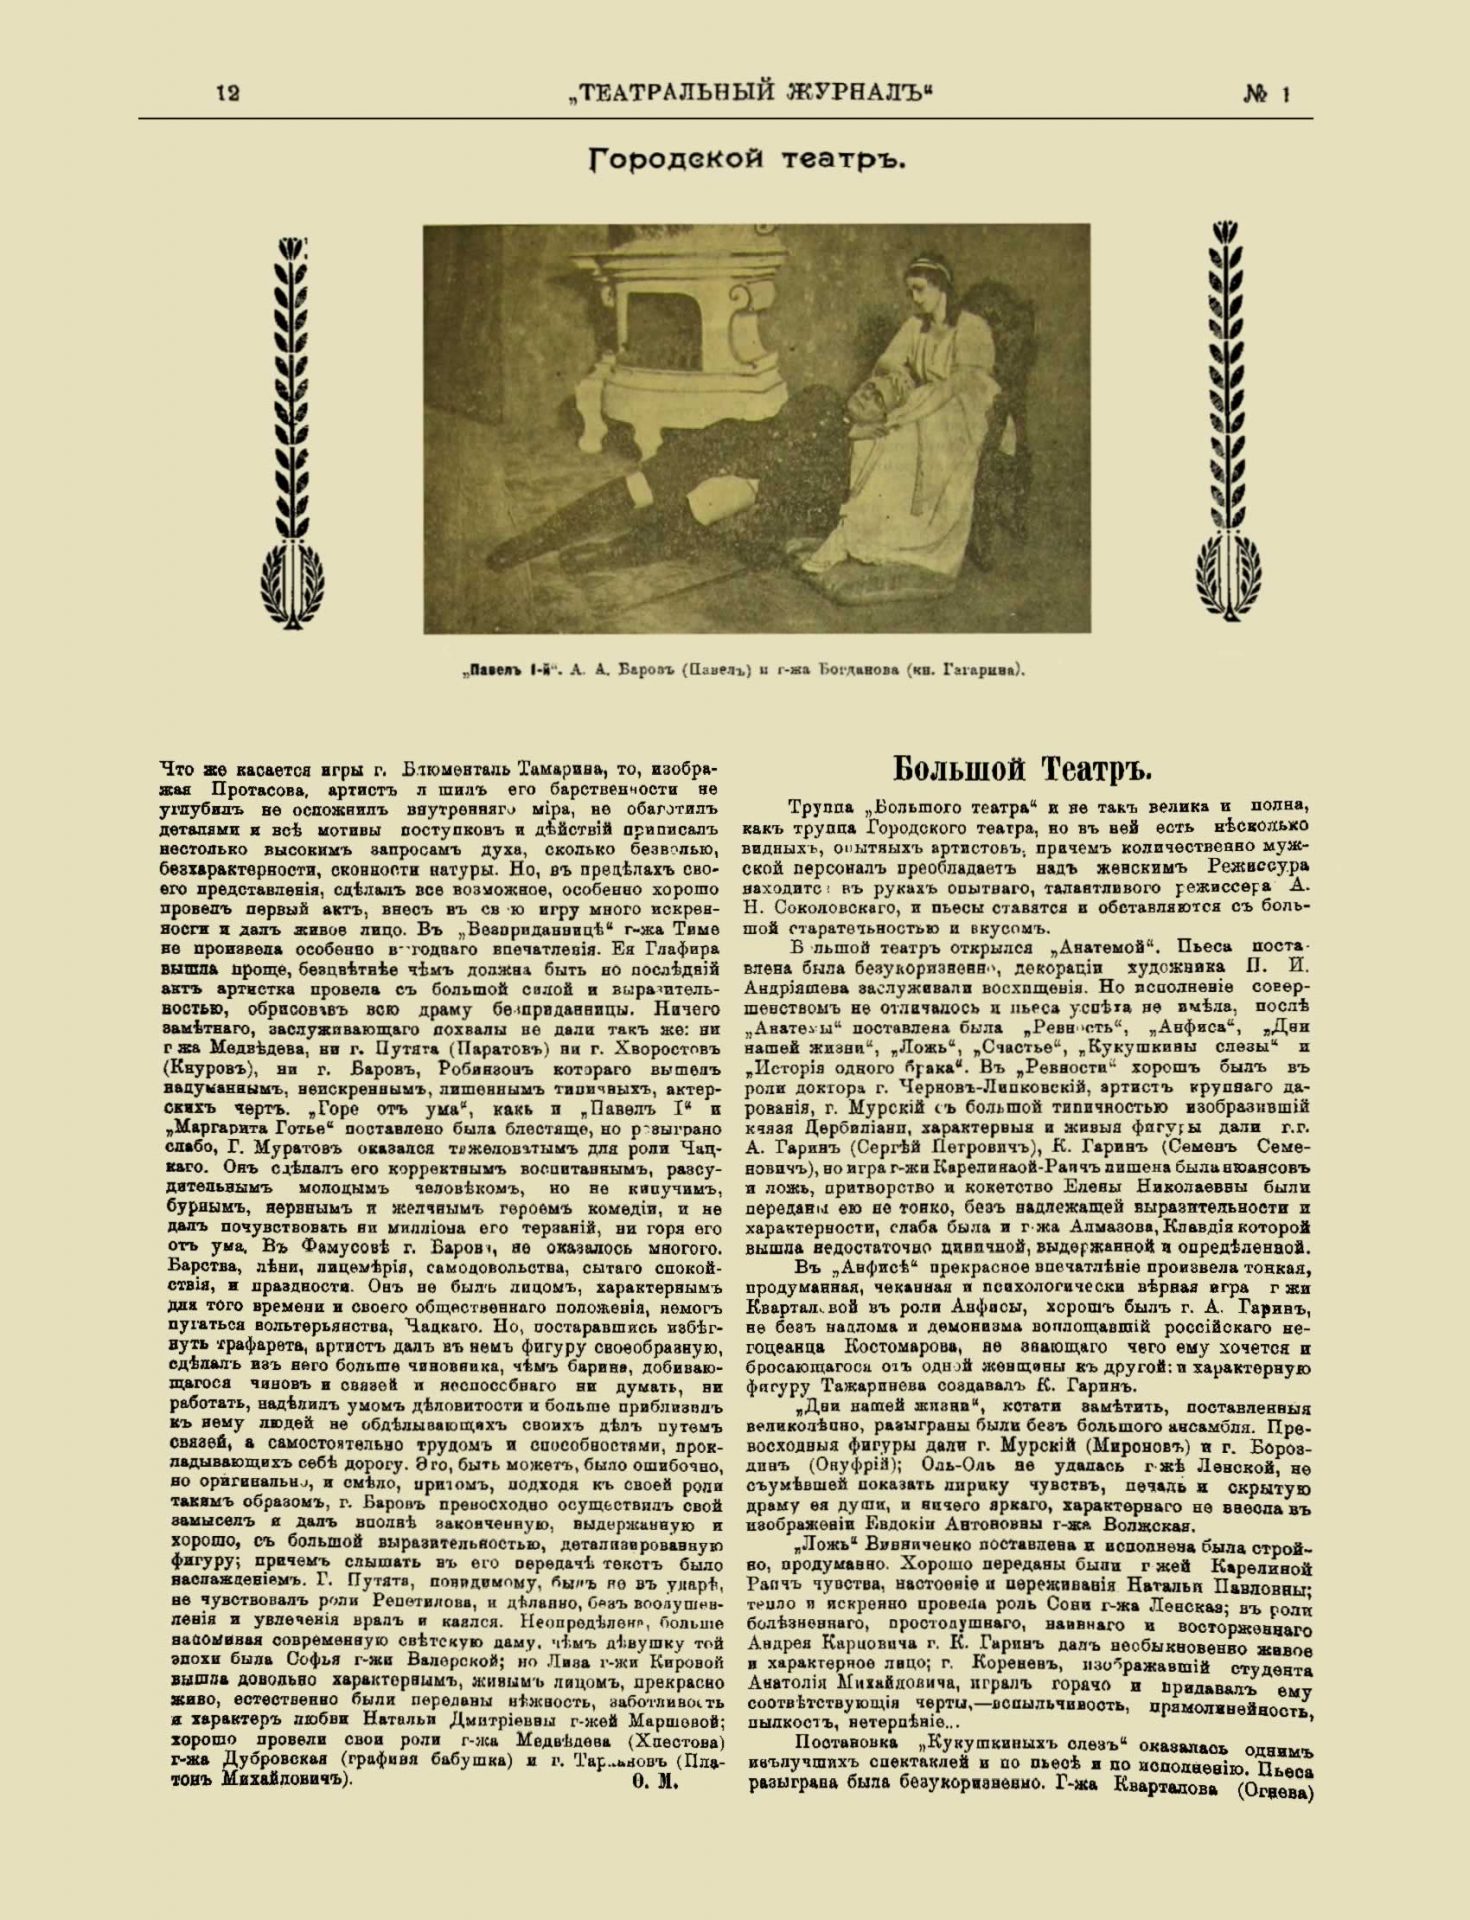 Театральный журнал_1918_№1